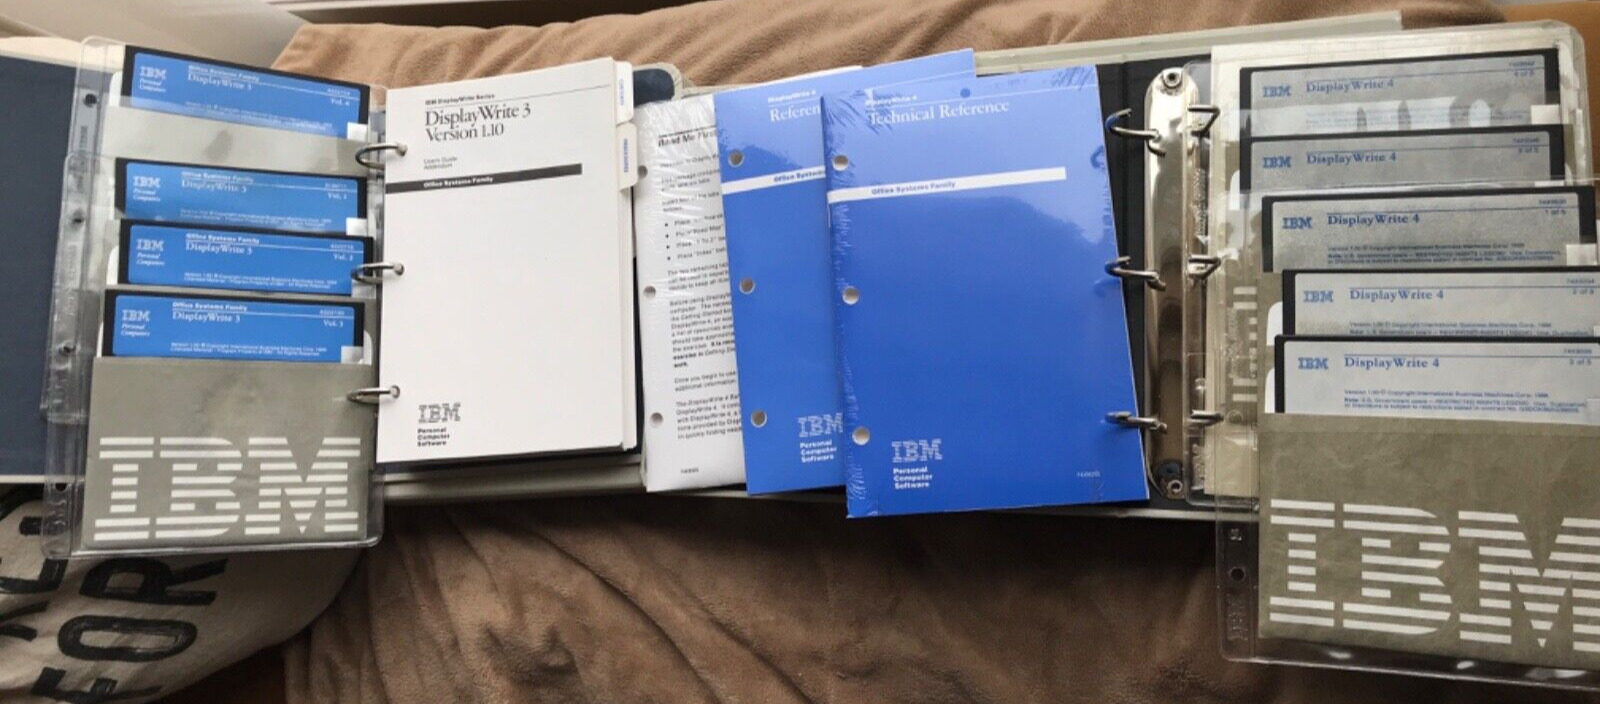 VTG 1985 IBM DisplayWrite 3&4 User’s Guide Volume 1 & 1986 REFERENCE Version 1.0